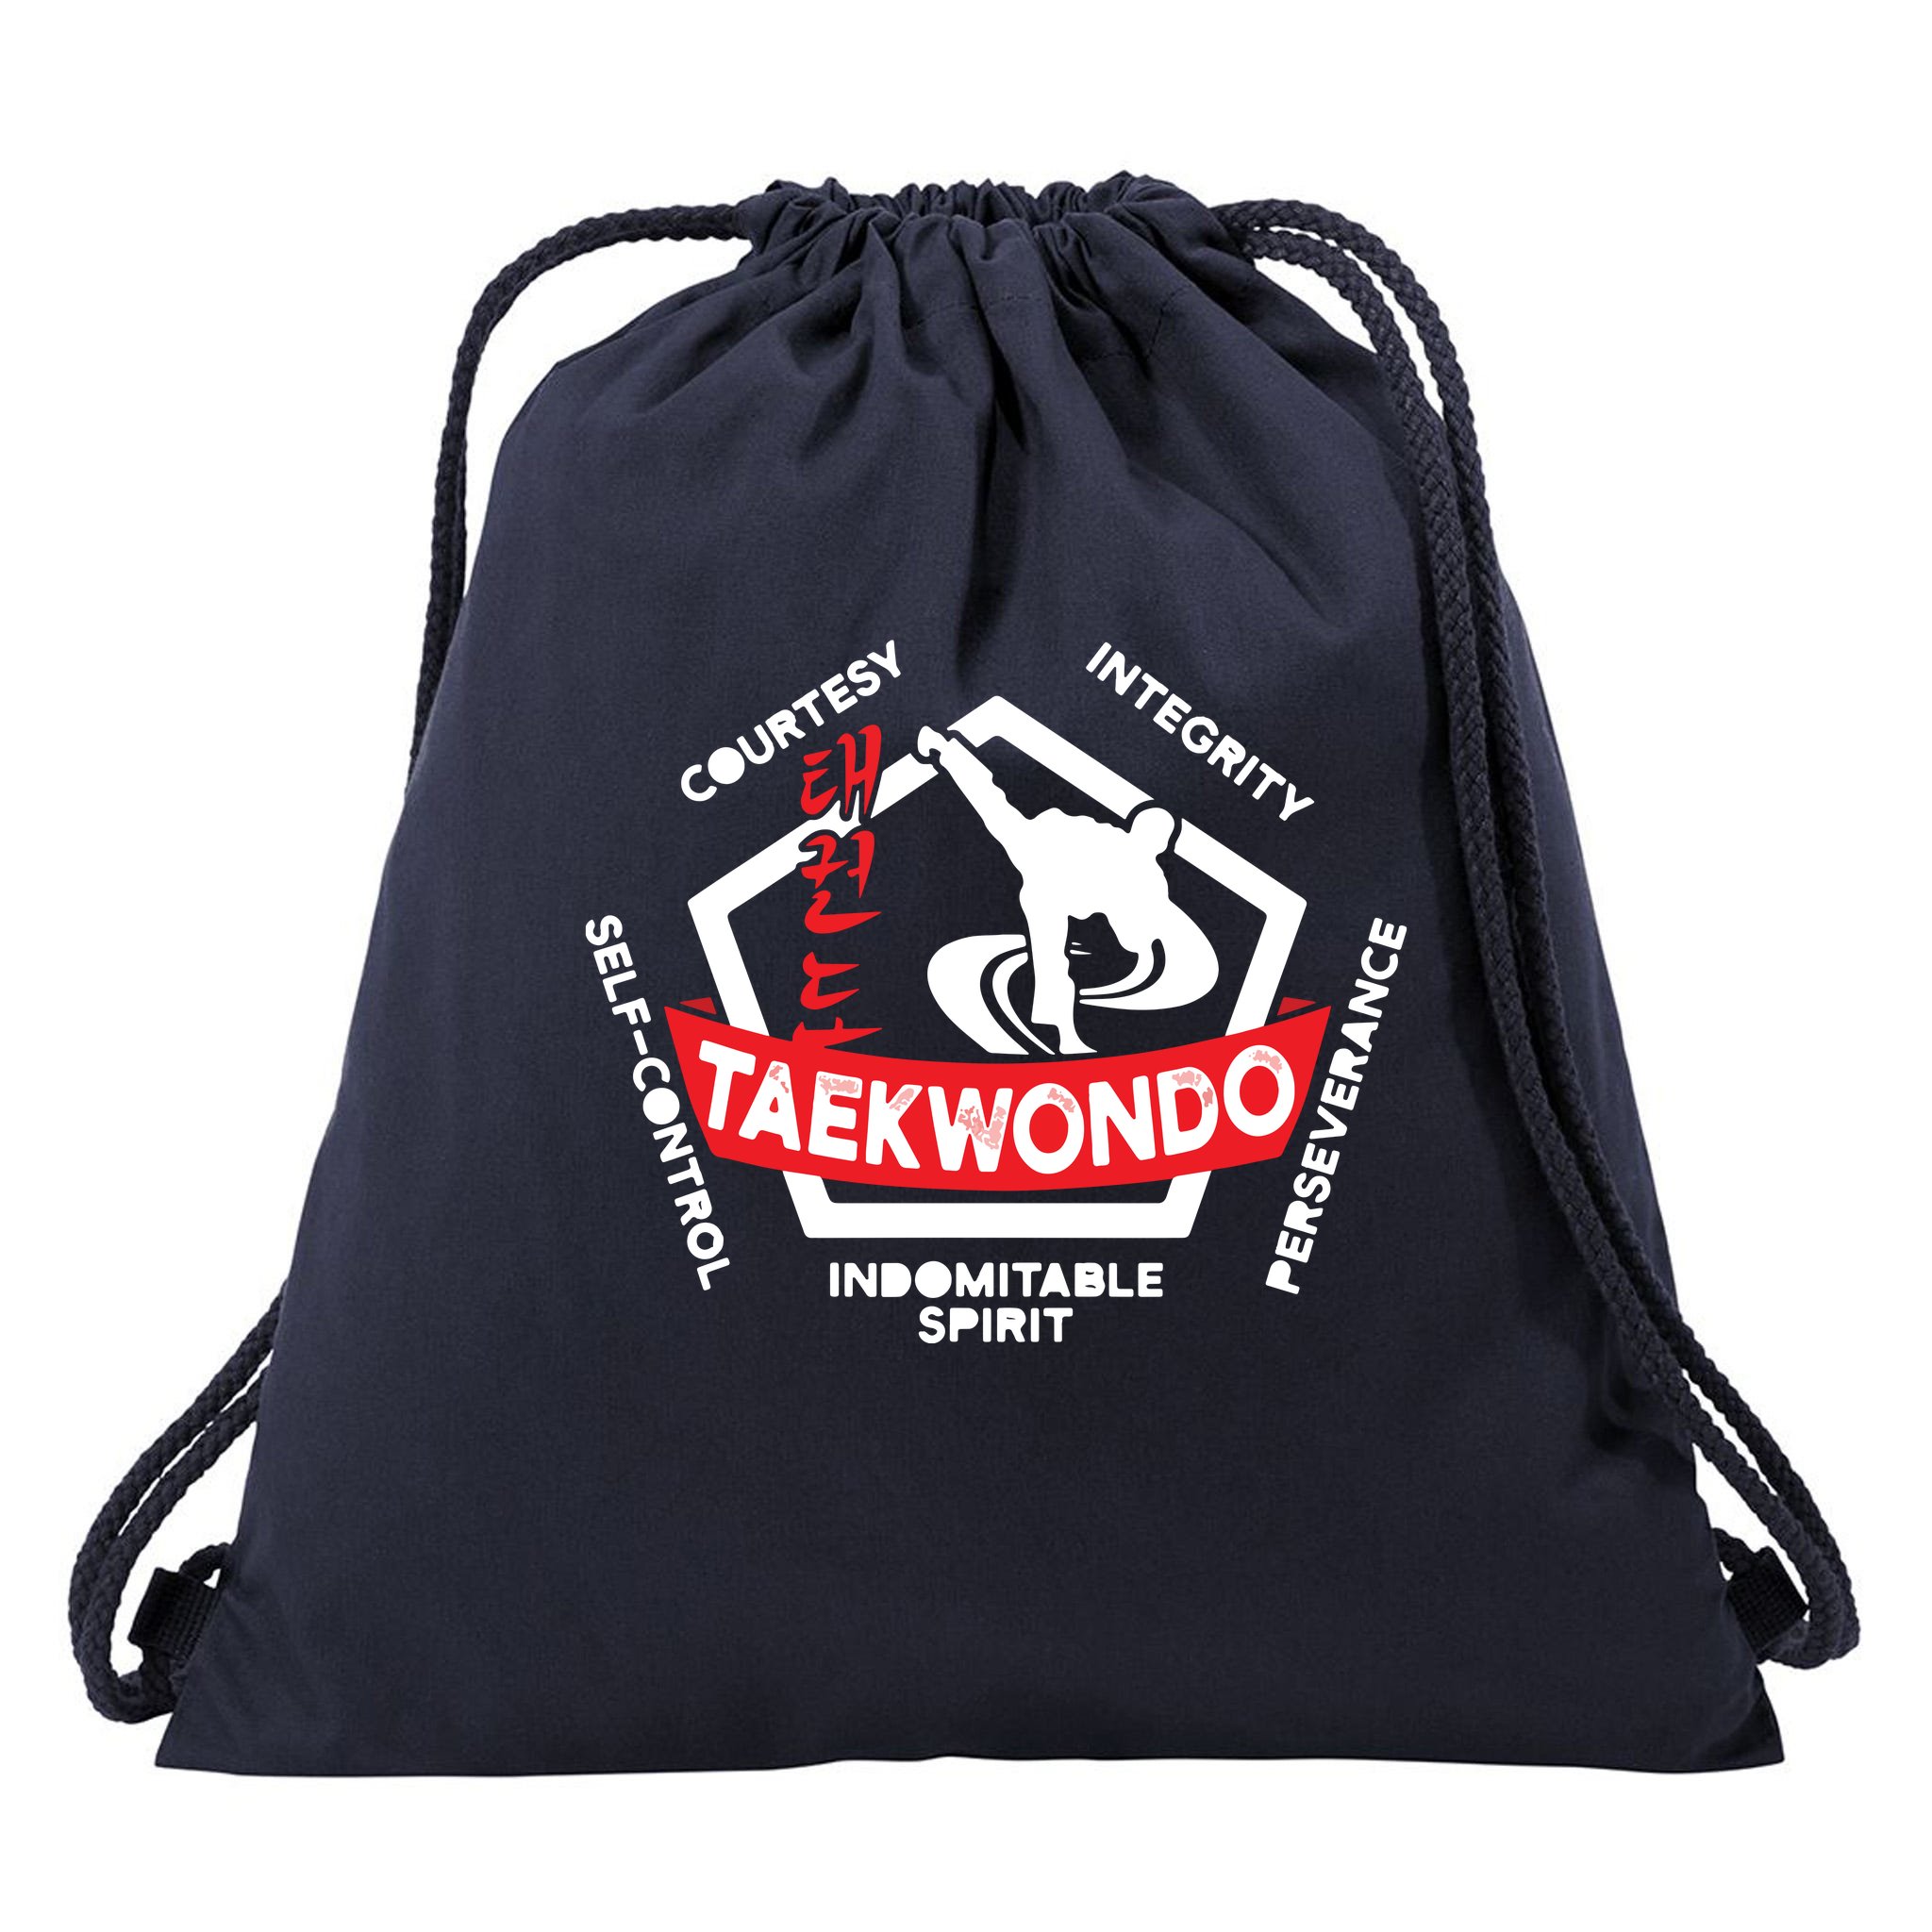 ATA Taekwondo duffle bag with sparring gear  172859694